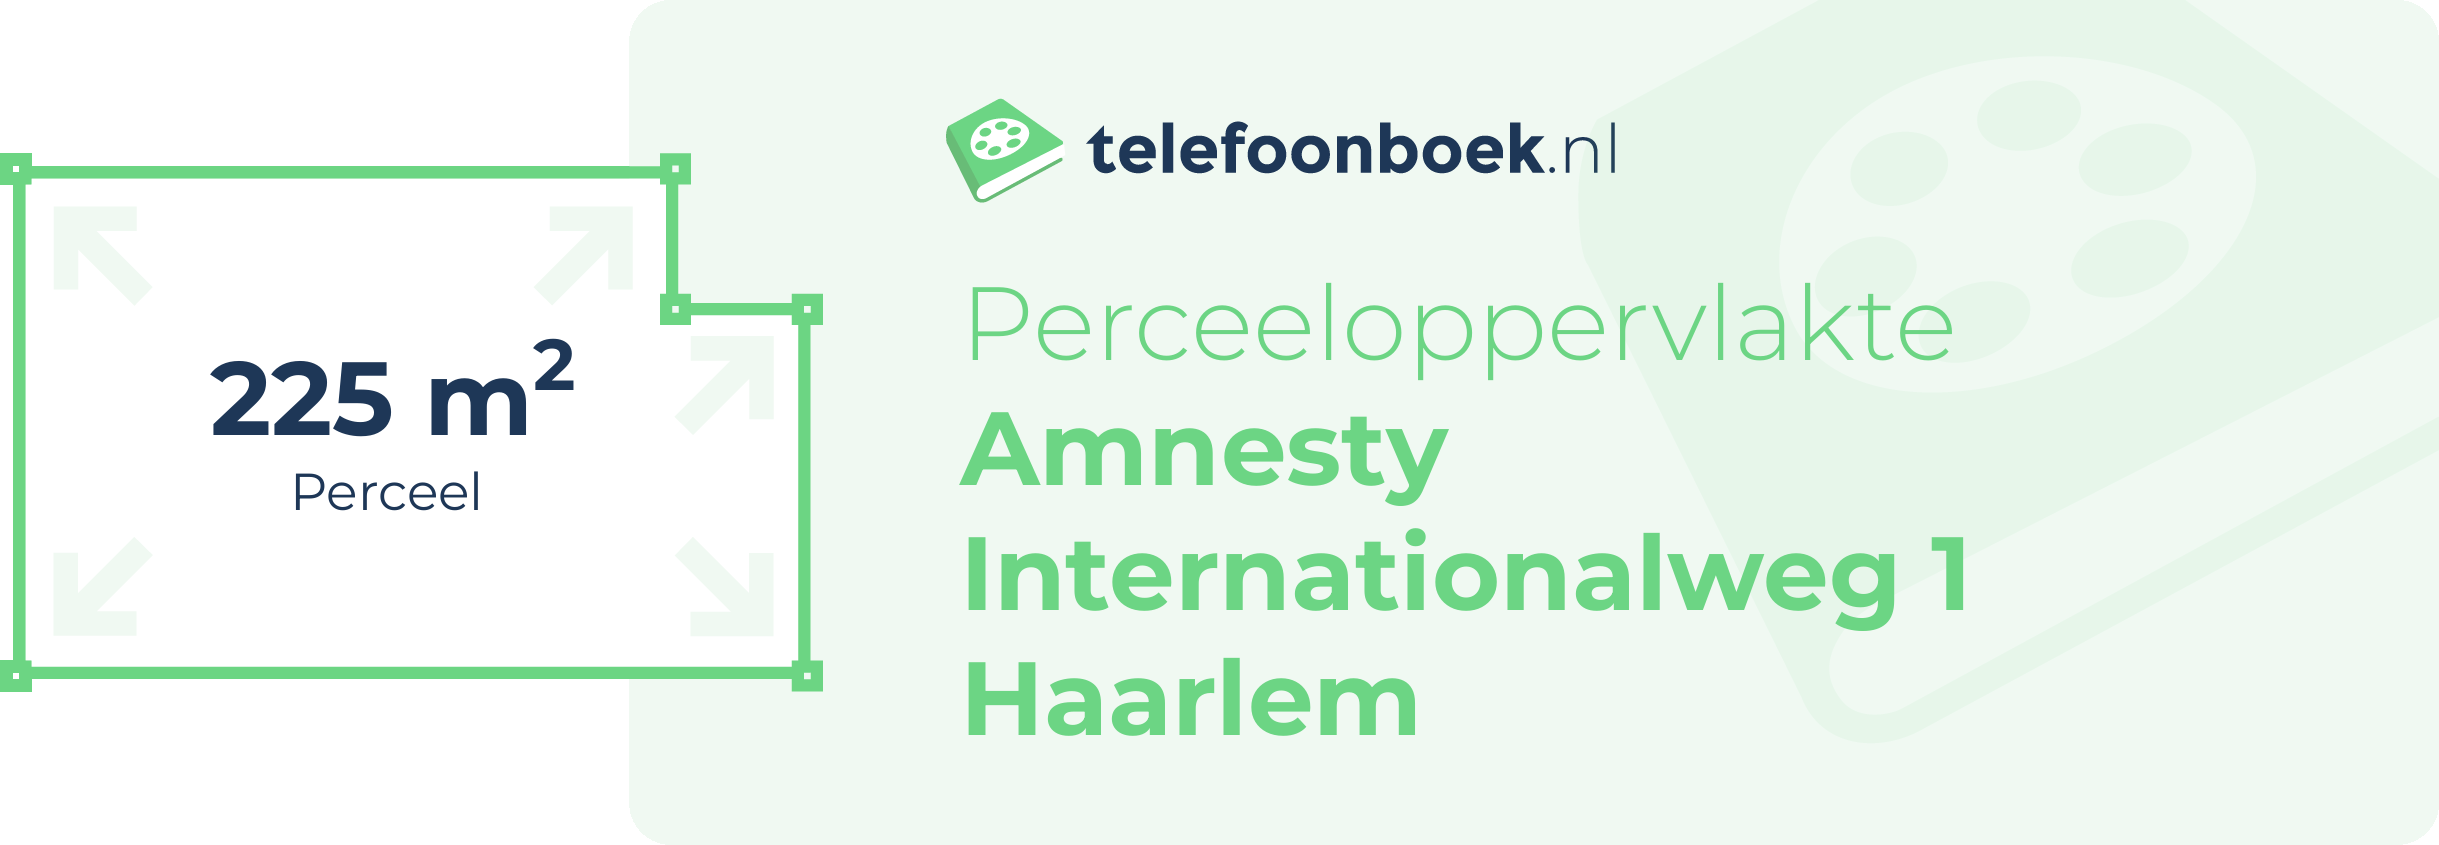 Perceeloppervlakte Amnesty Internationalweg 1 Haarlem